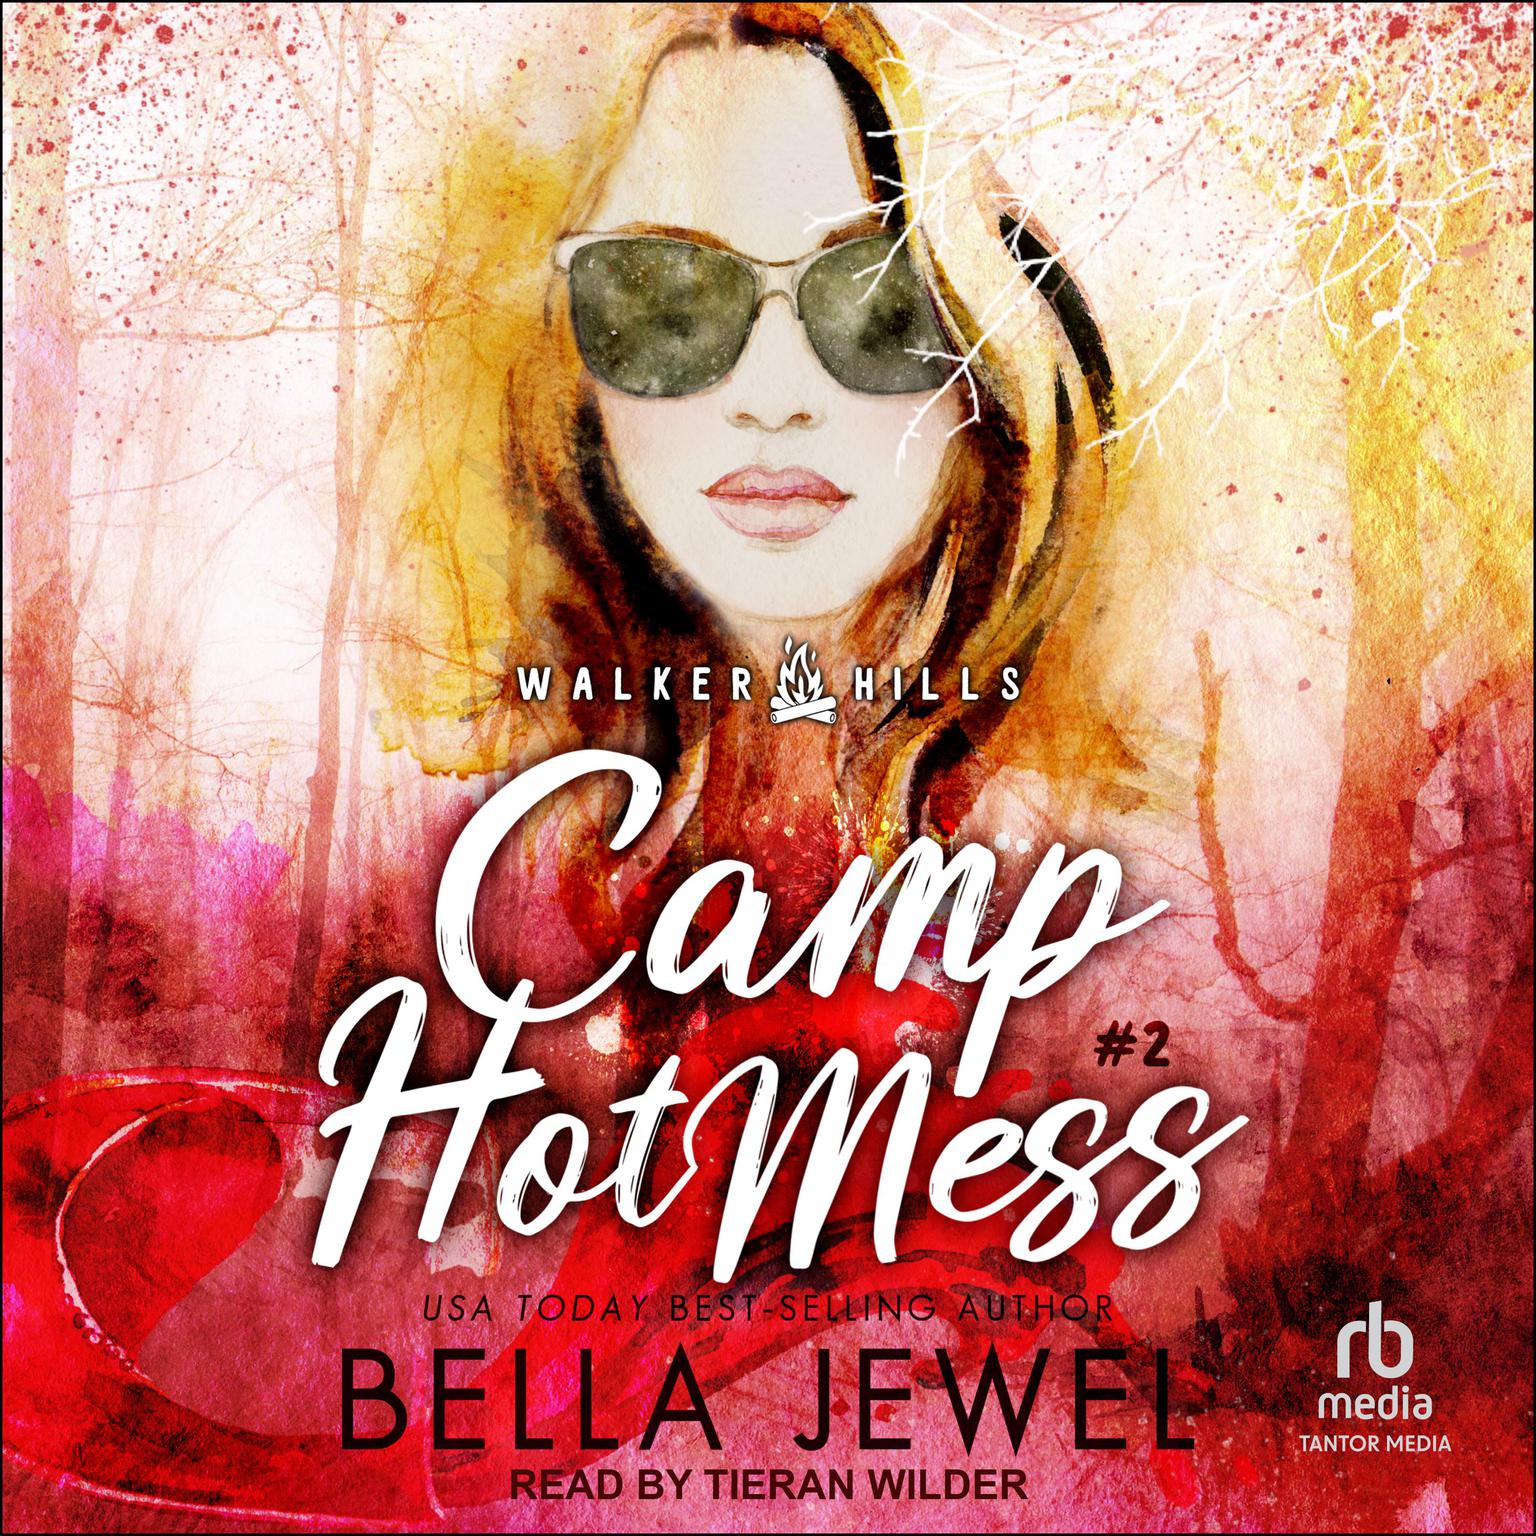 Camp Hot Mess Audiobook, by Bella Jewel